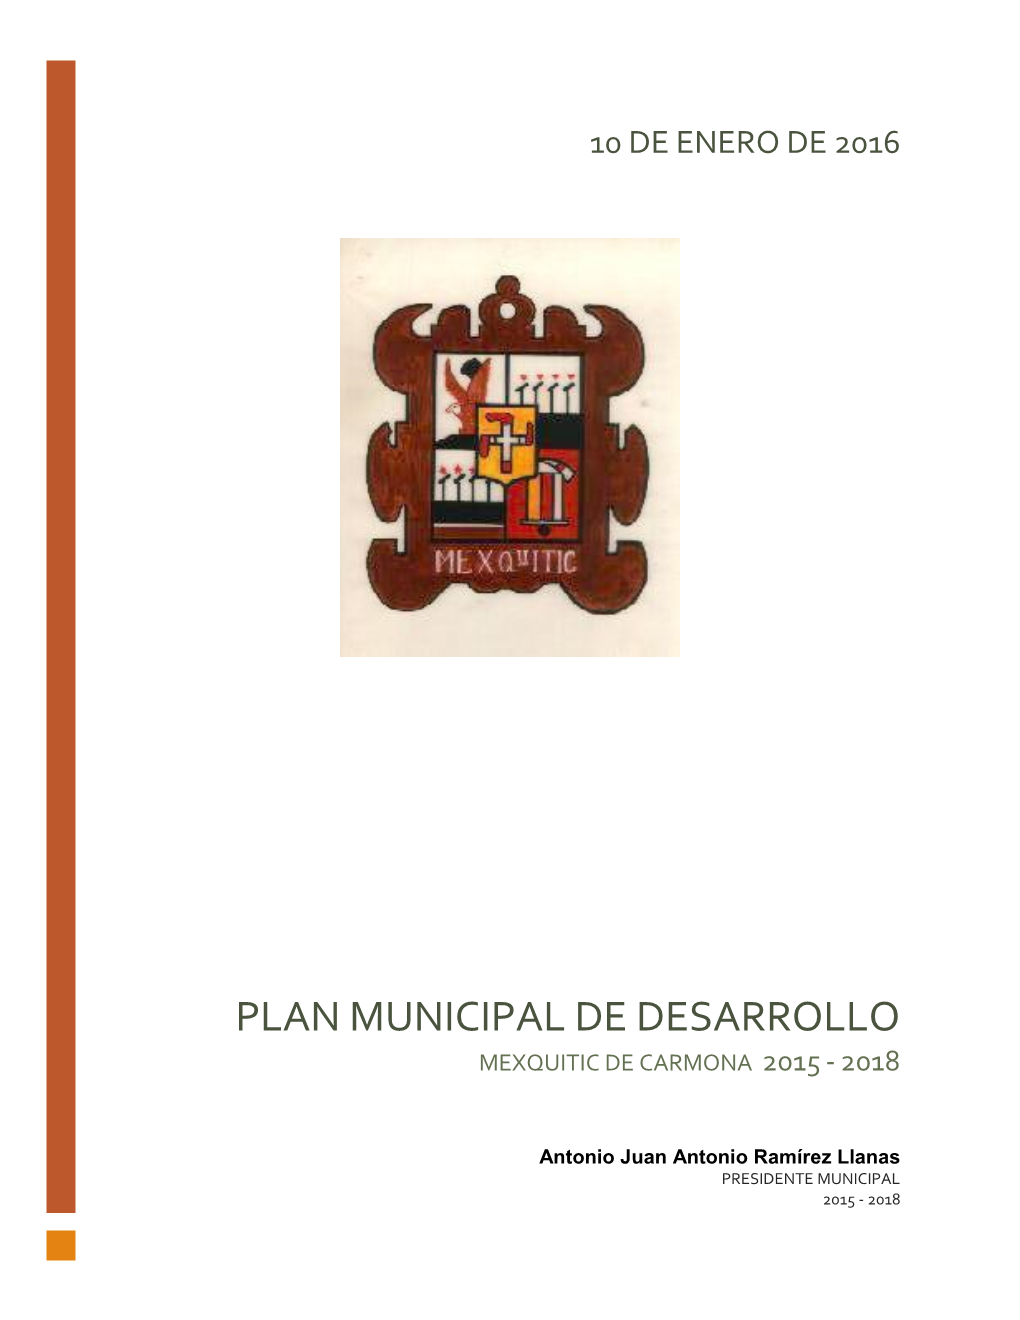 Plan Municipal De Desarrollo Mexquitic De Carmona 2015 - 2018